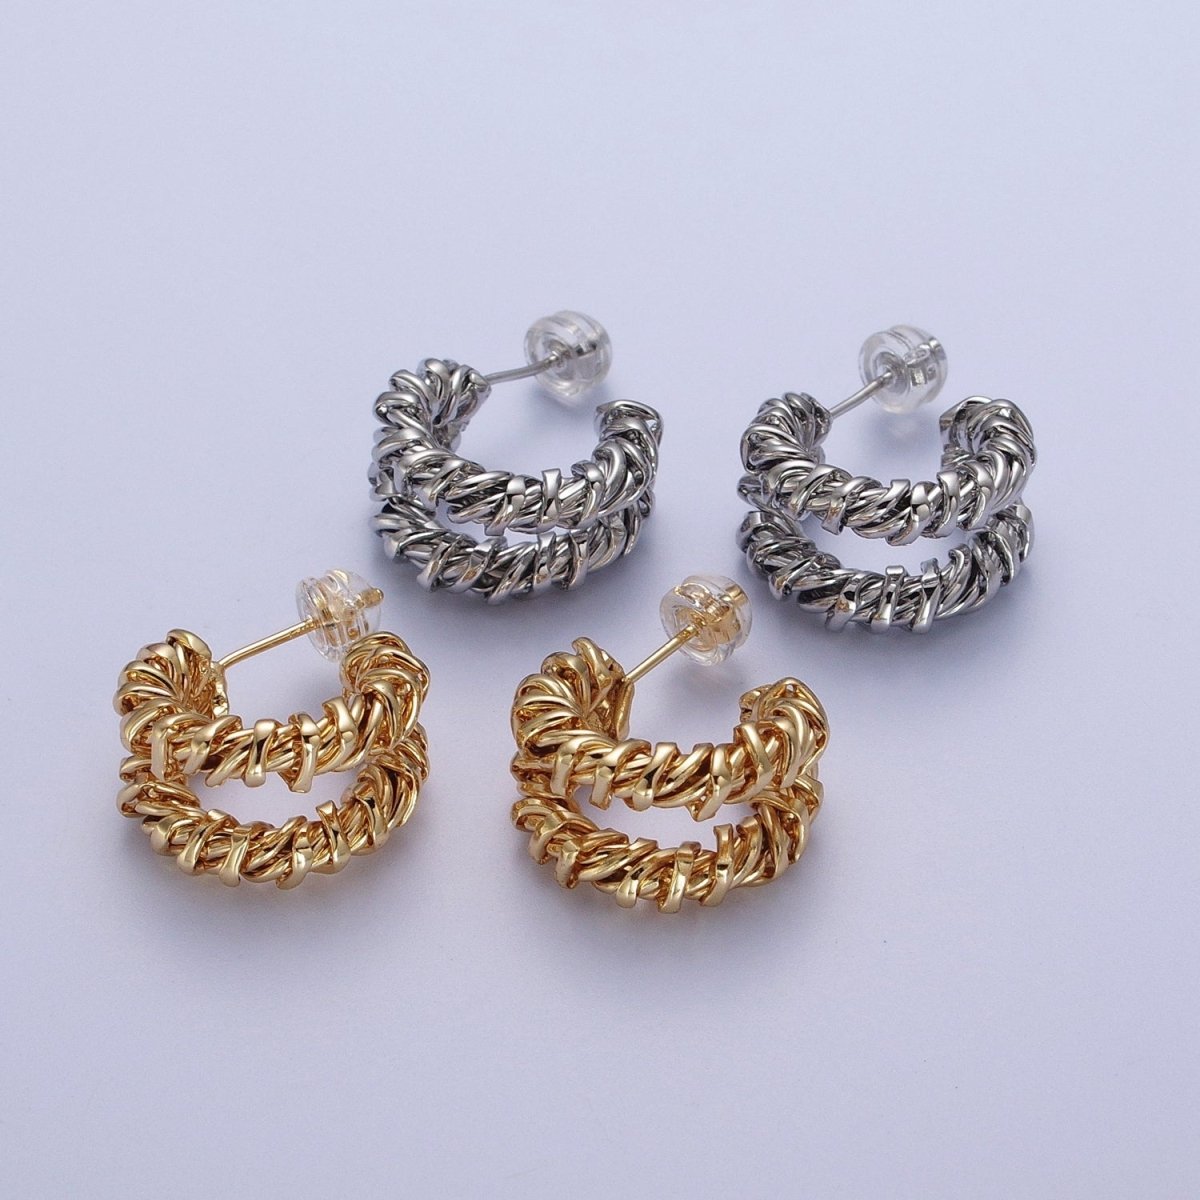 Double Twisted 18mm C Shaped Hoops Stud Earrings in Silver & Gold | Y-110 Y-111 - DLUXCA